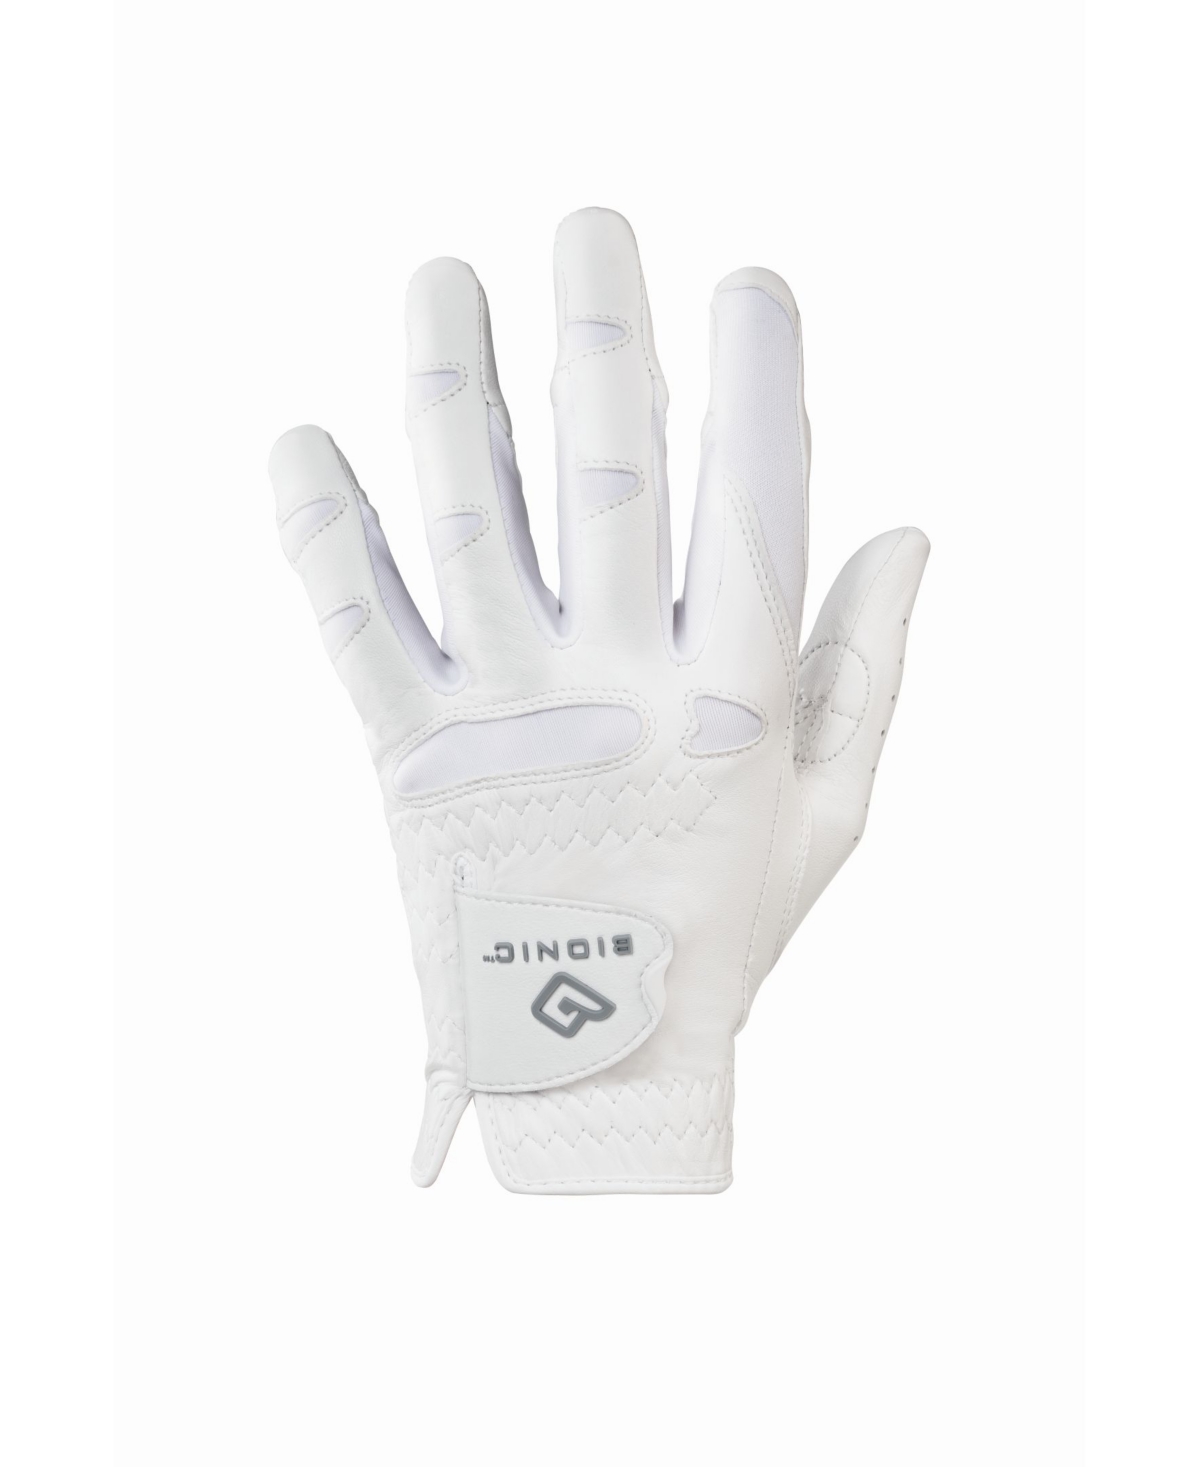 Women's Natural Fit Golf Glove - Left Hand - White